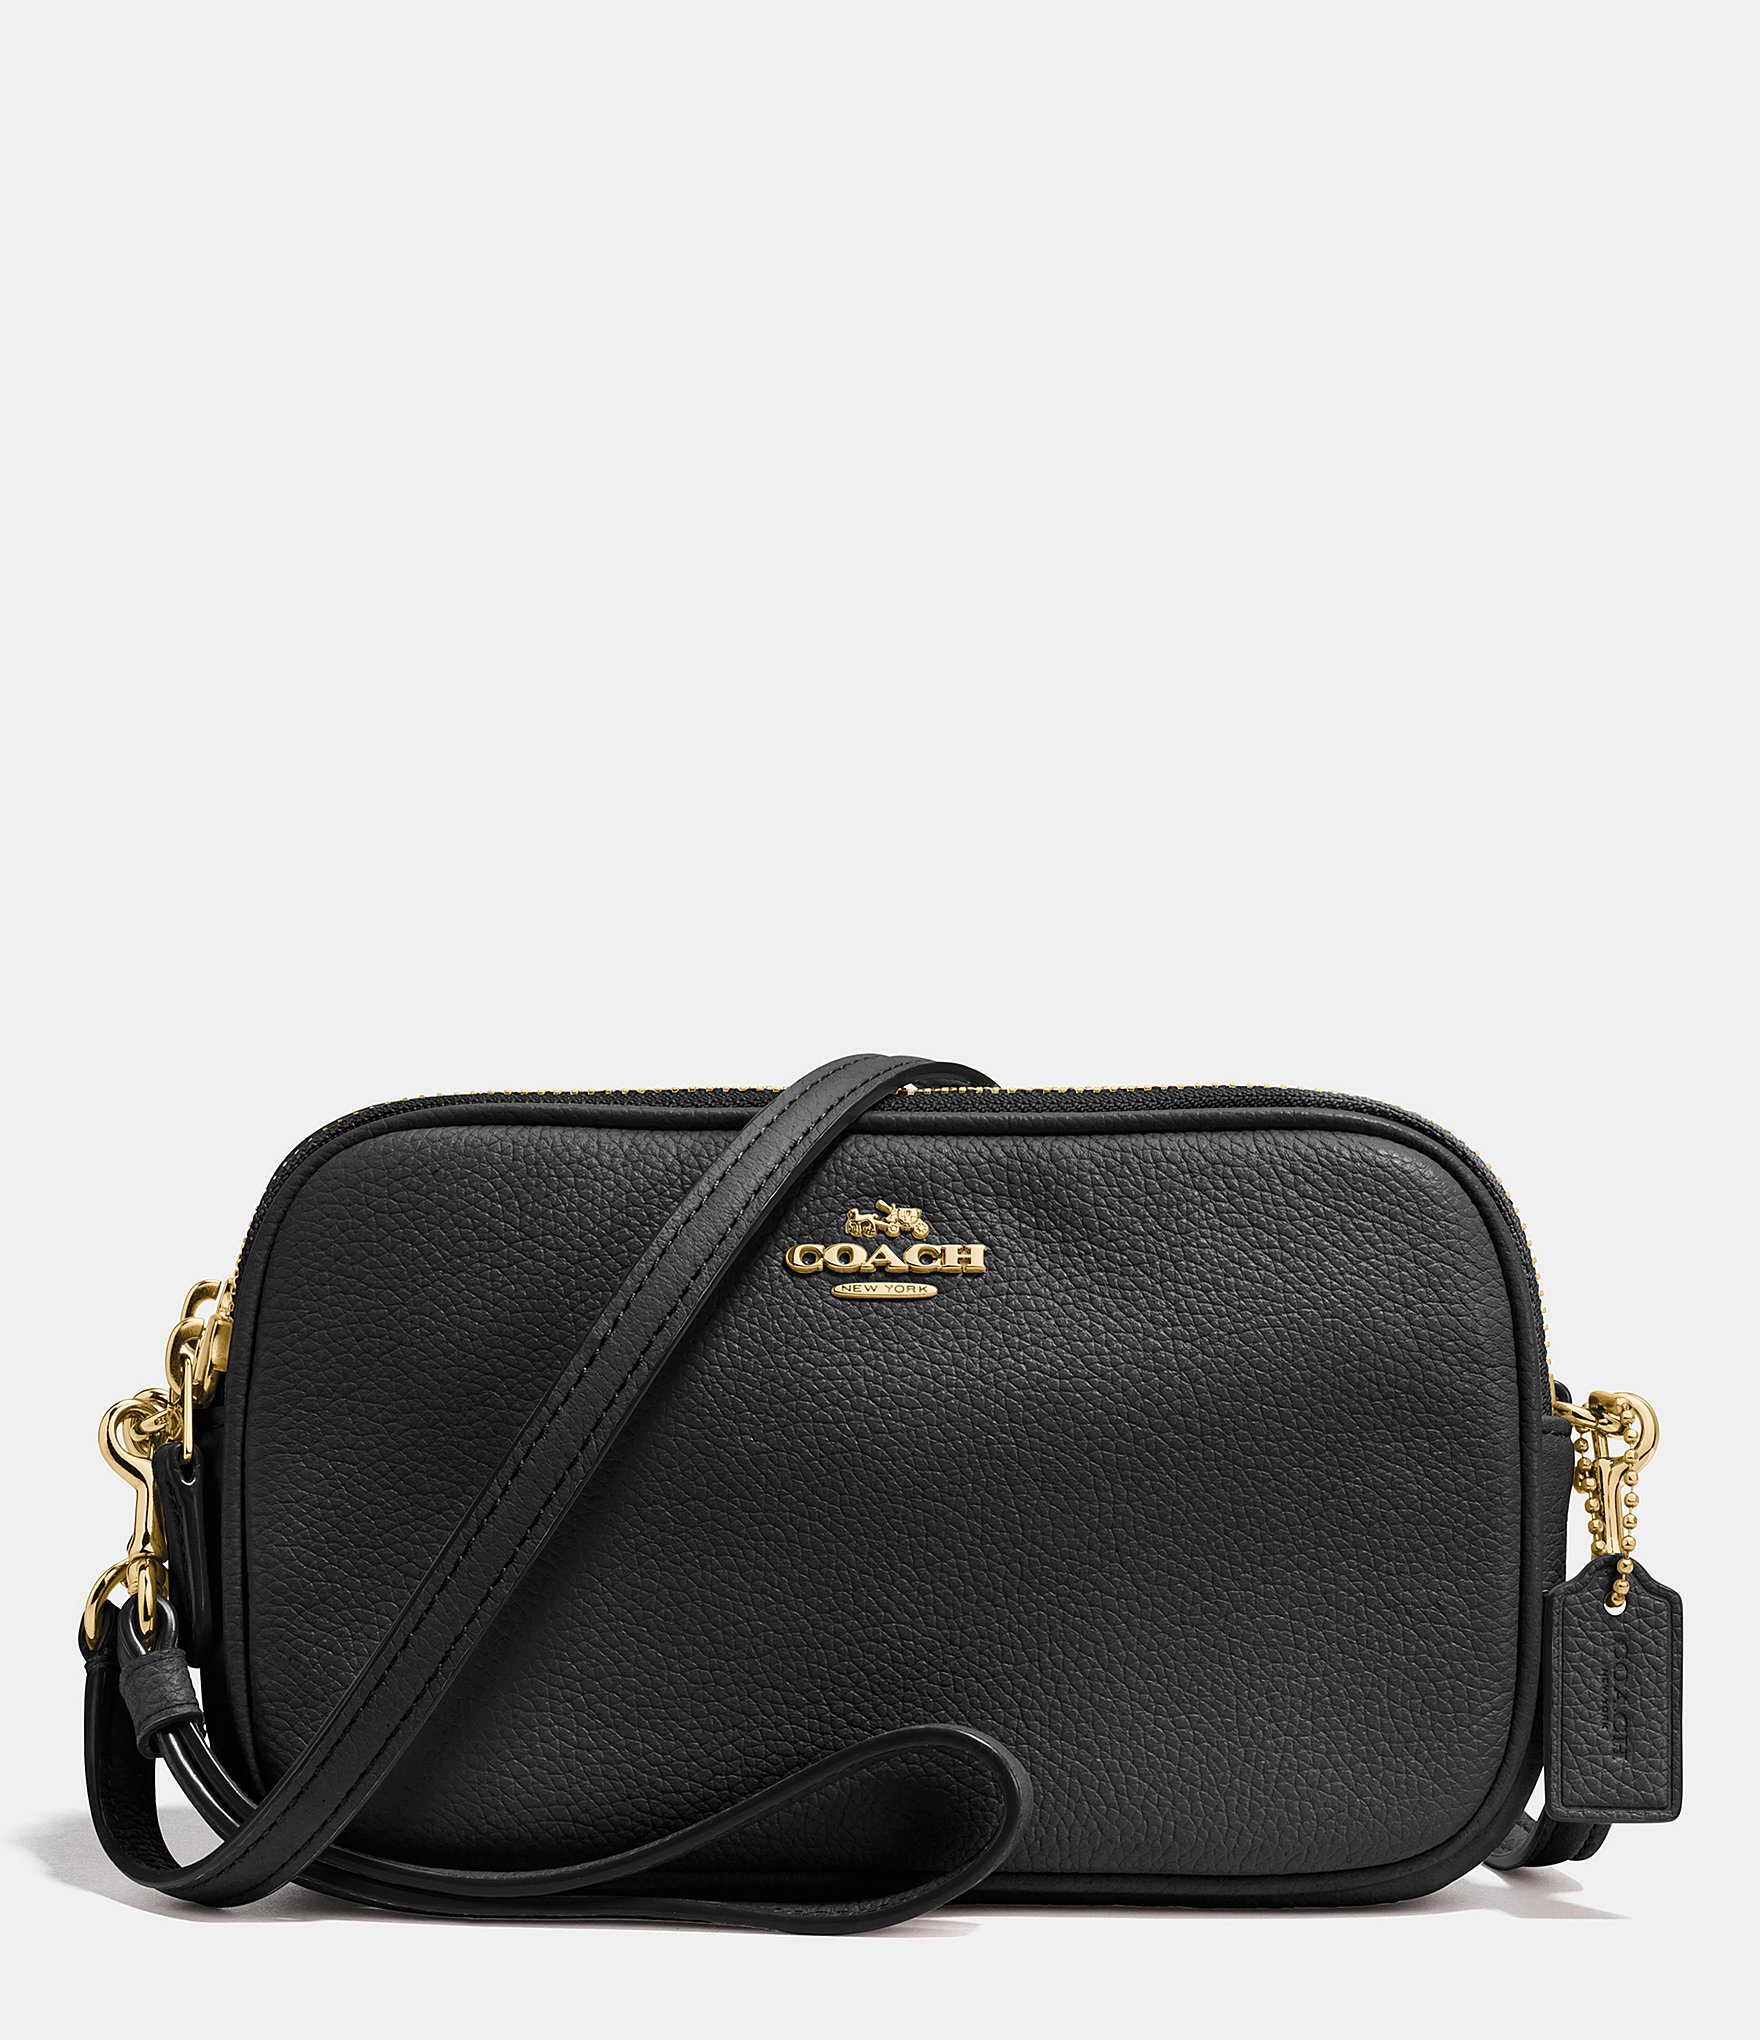 COACH Black Handbags, Purses & Wallets | Dillards